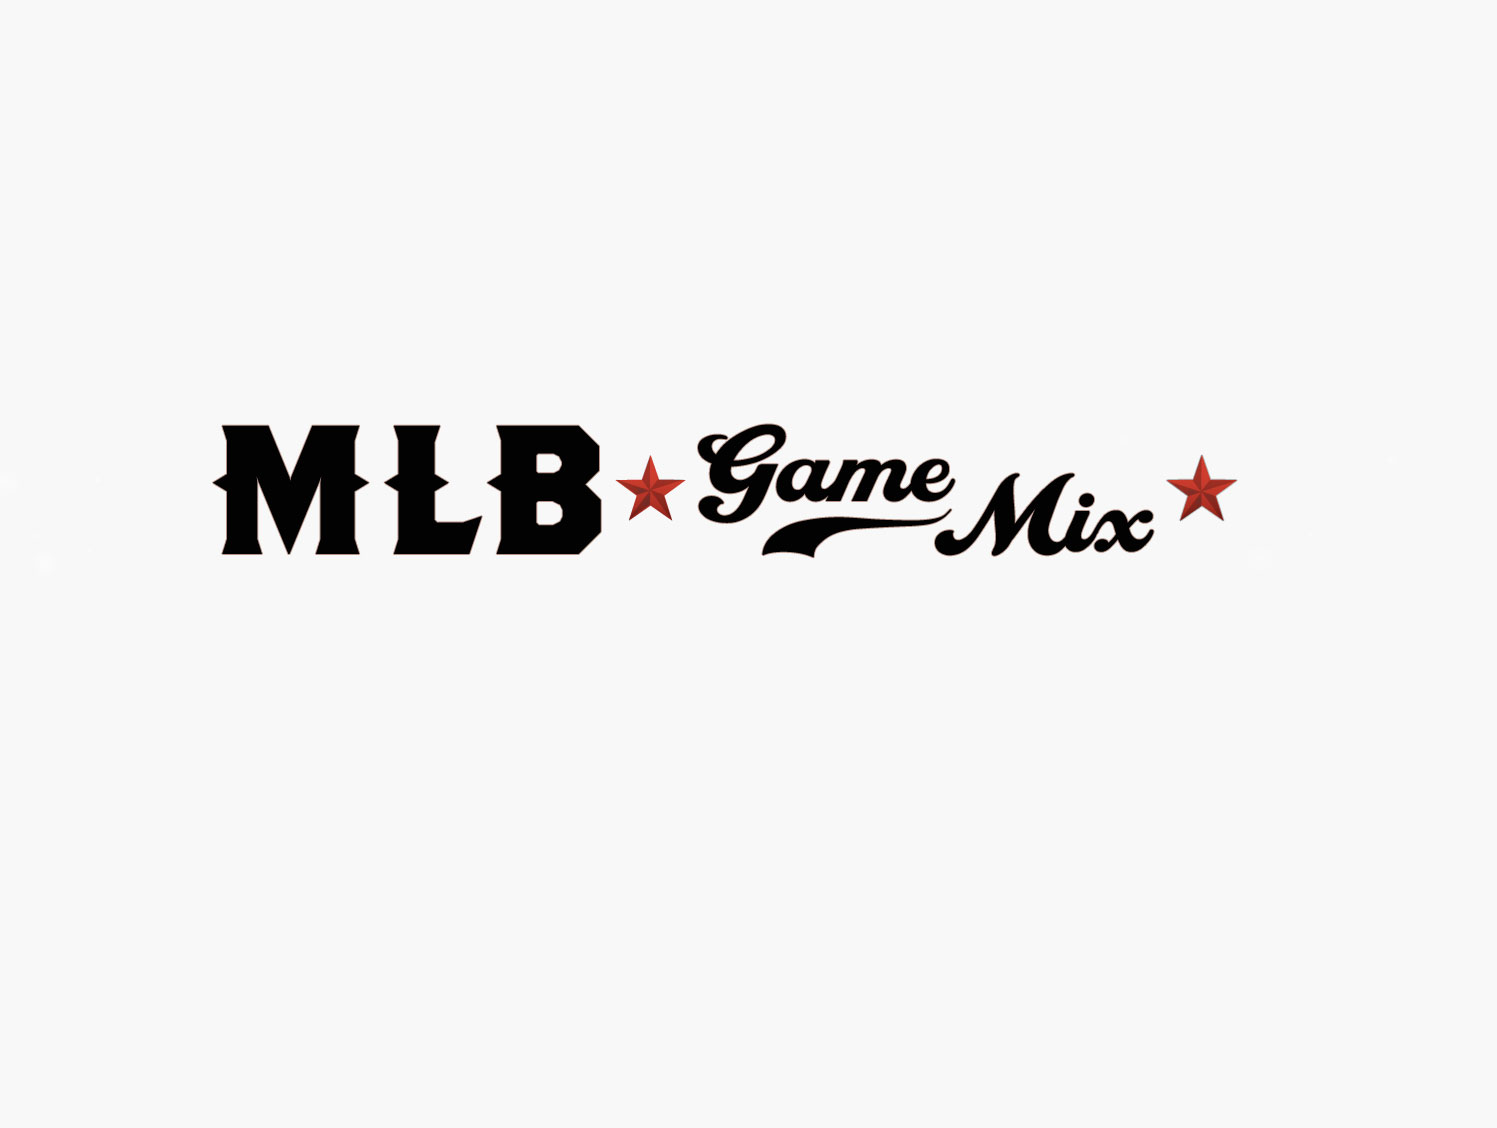 dig_prod_MLB_Mix_type.jpg